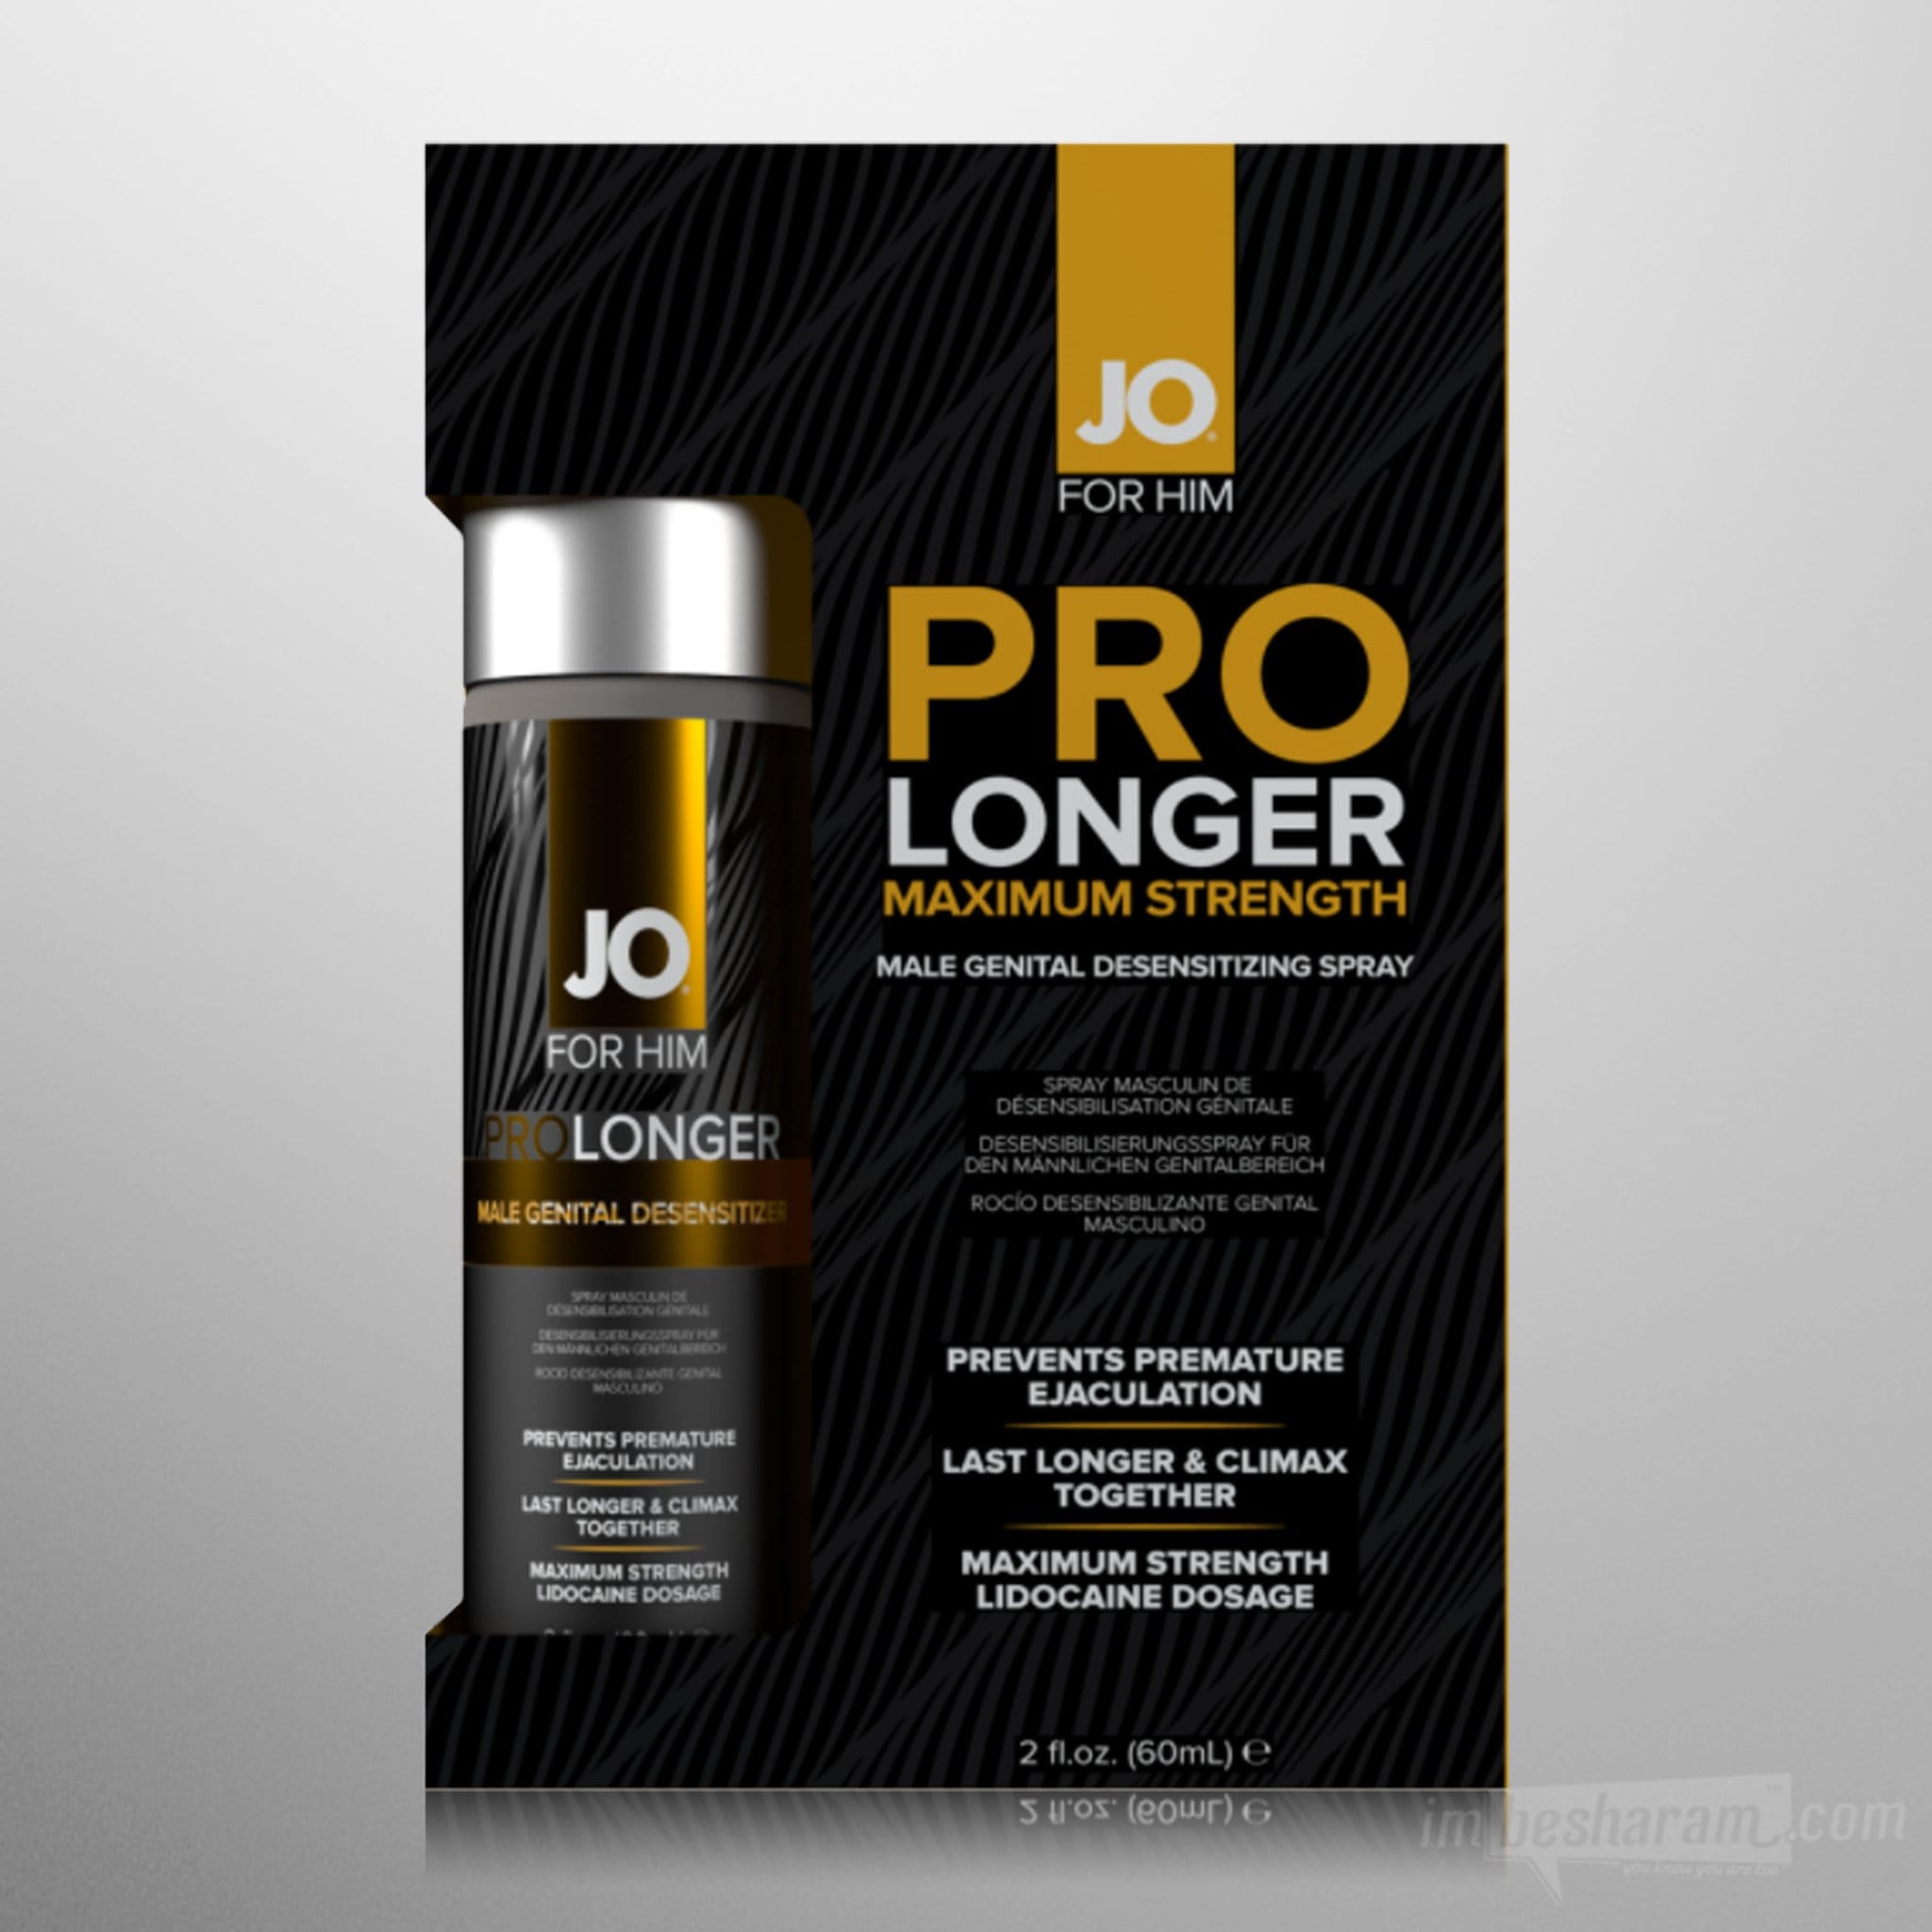 System Jo Prolonger Spray with Lidocaine